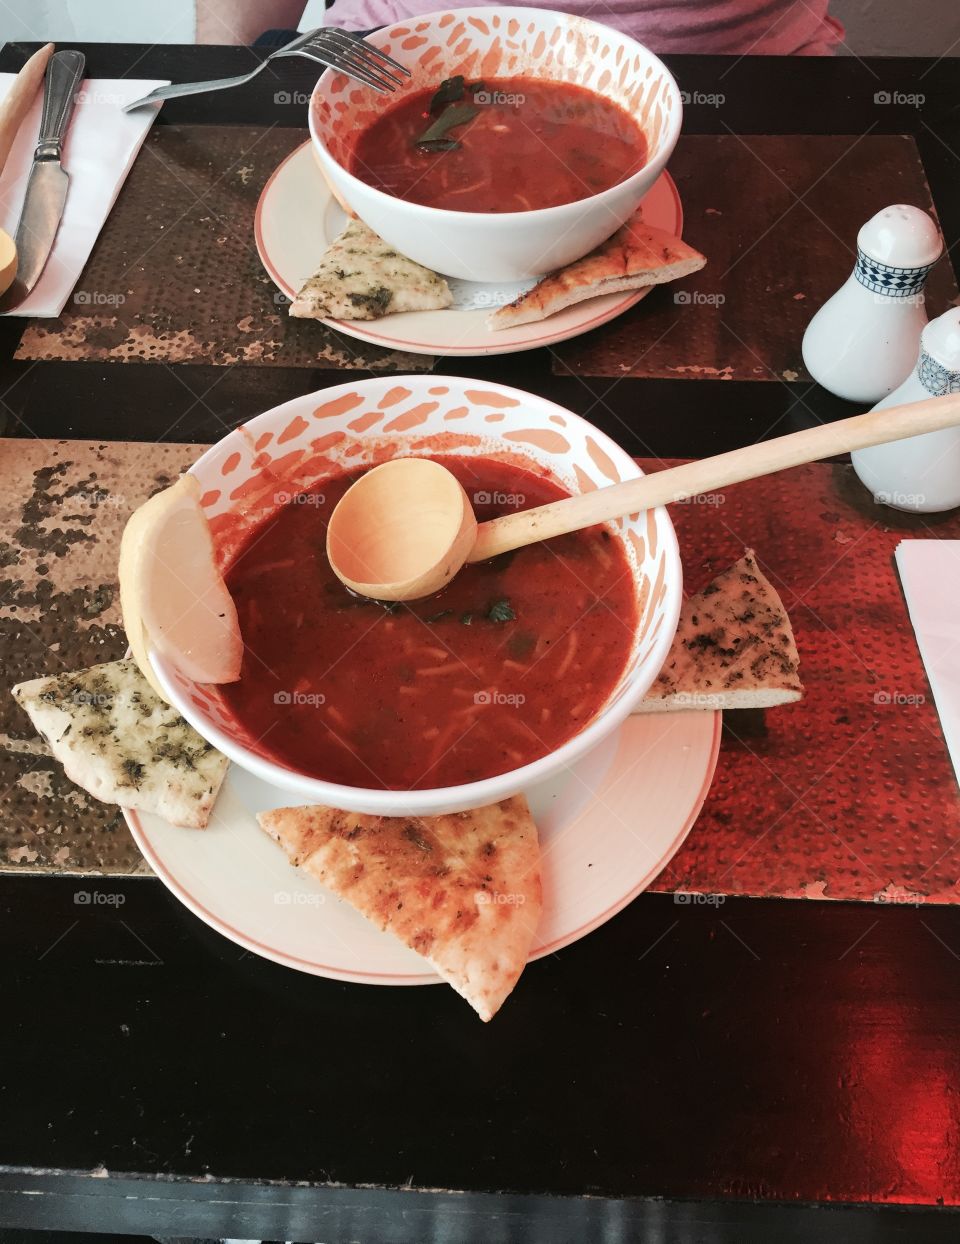 Marocan soup